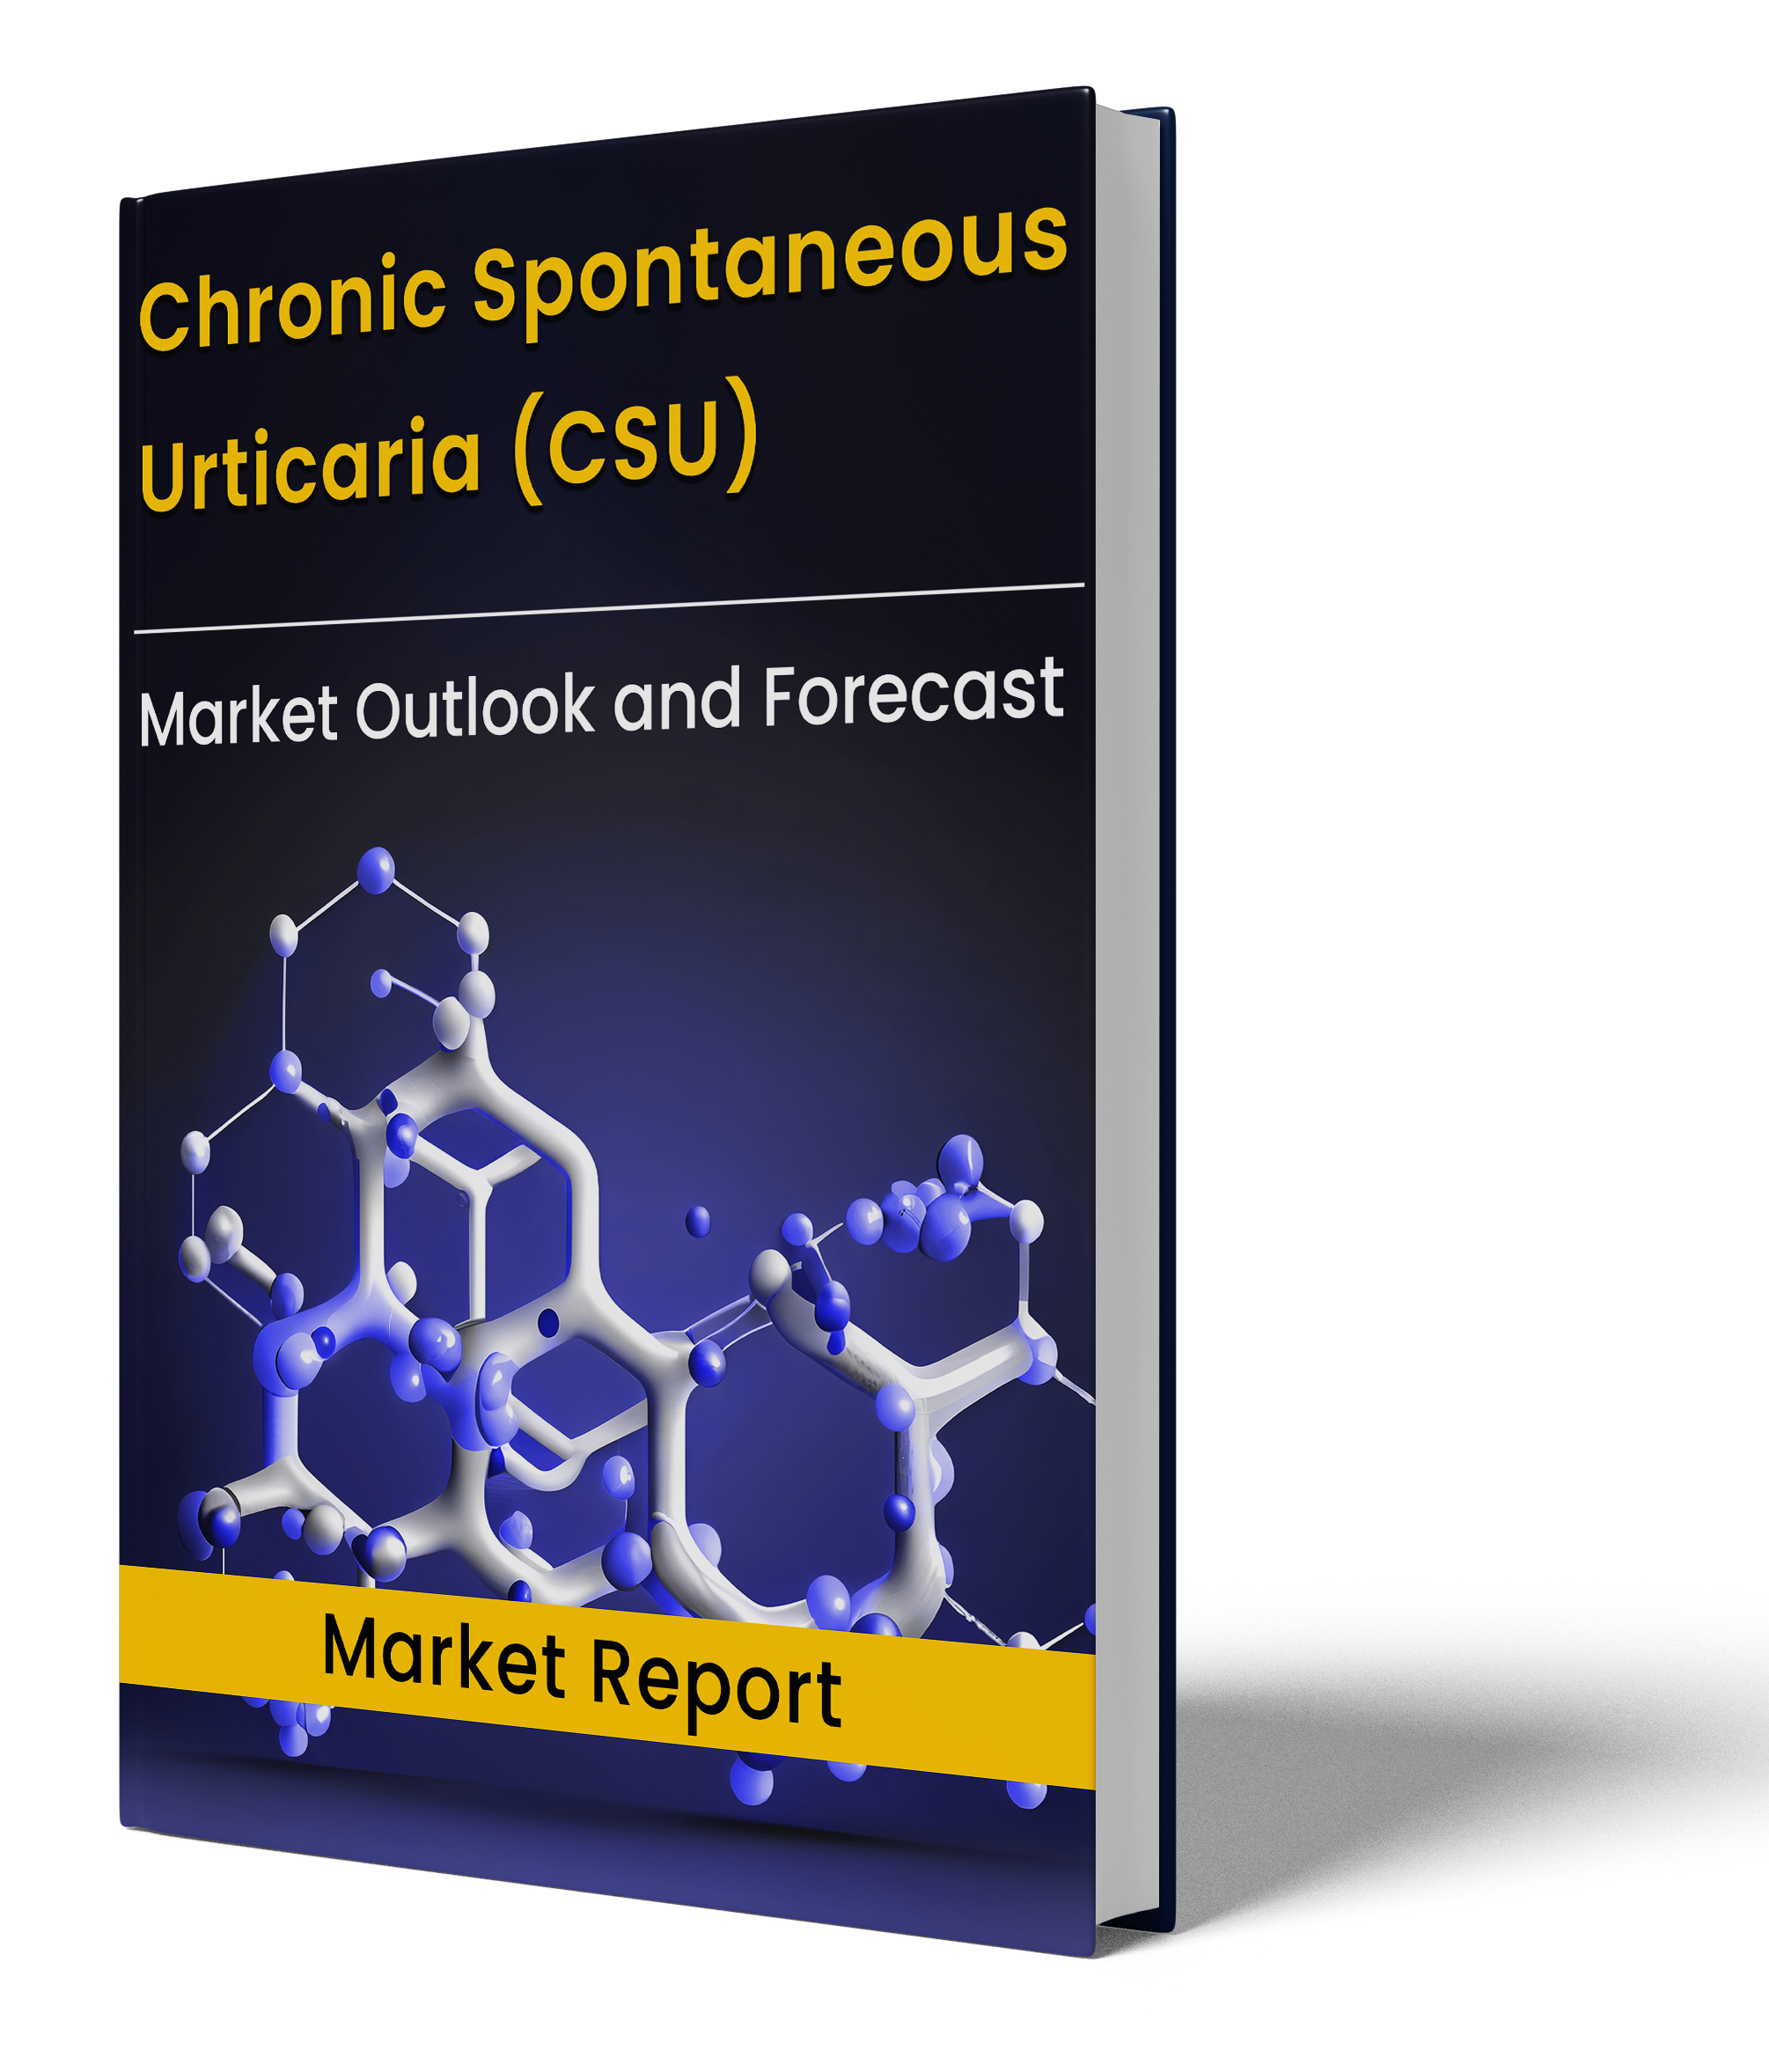 Chronic Spontaneous Urticaria Market Report